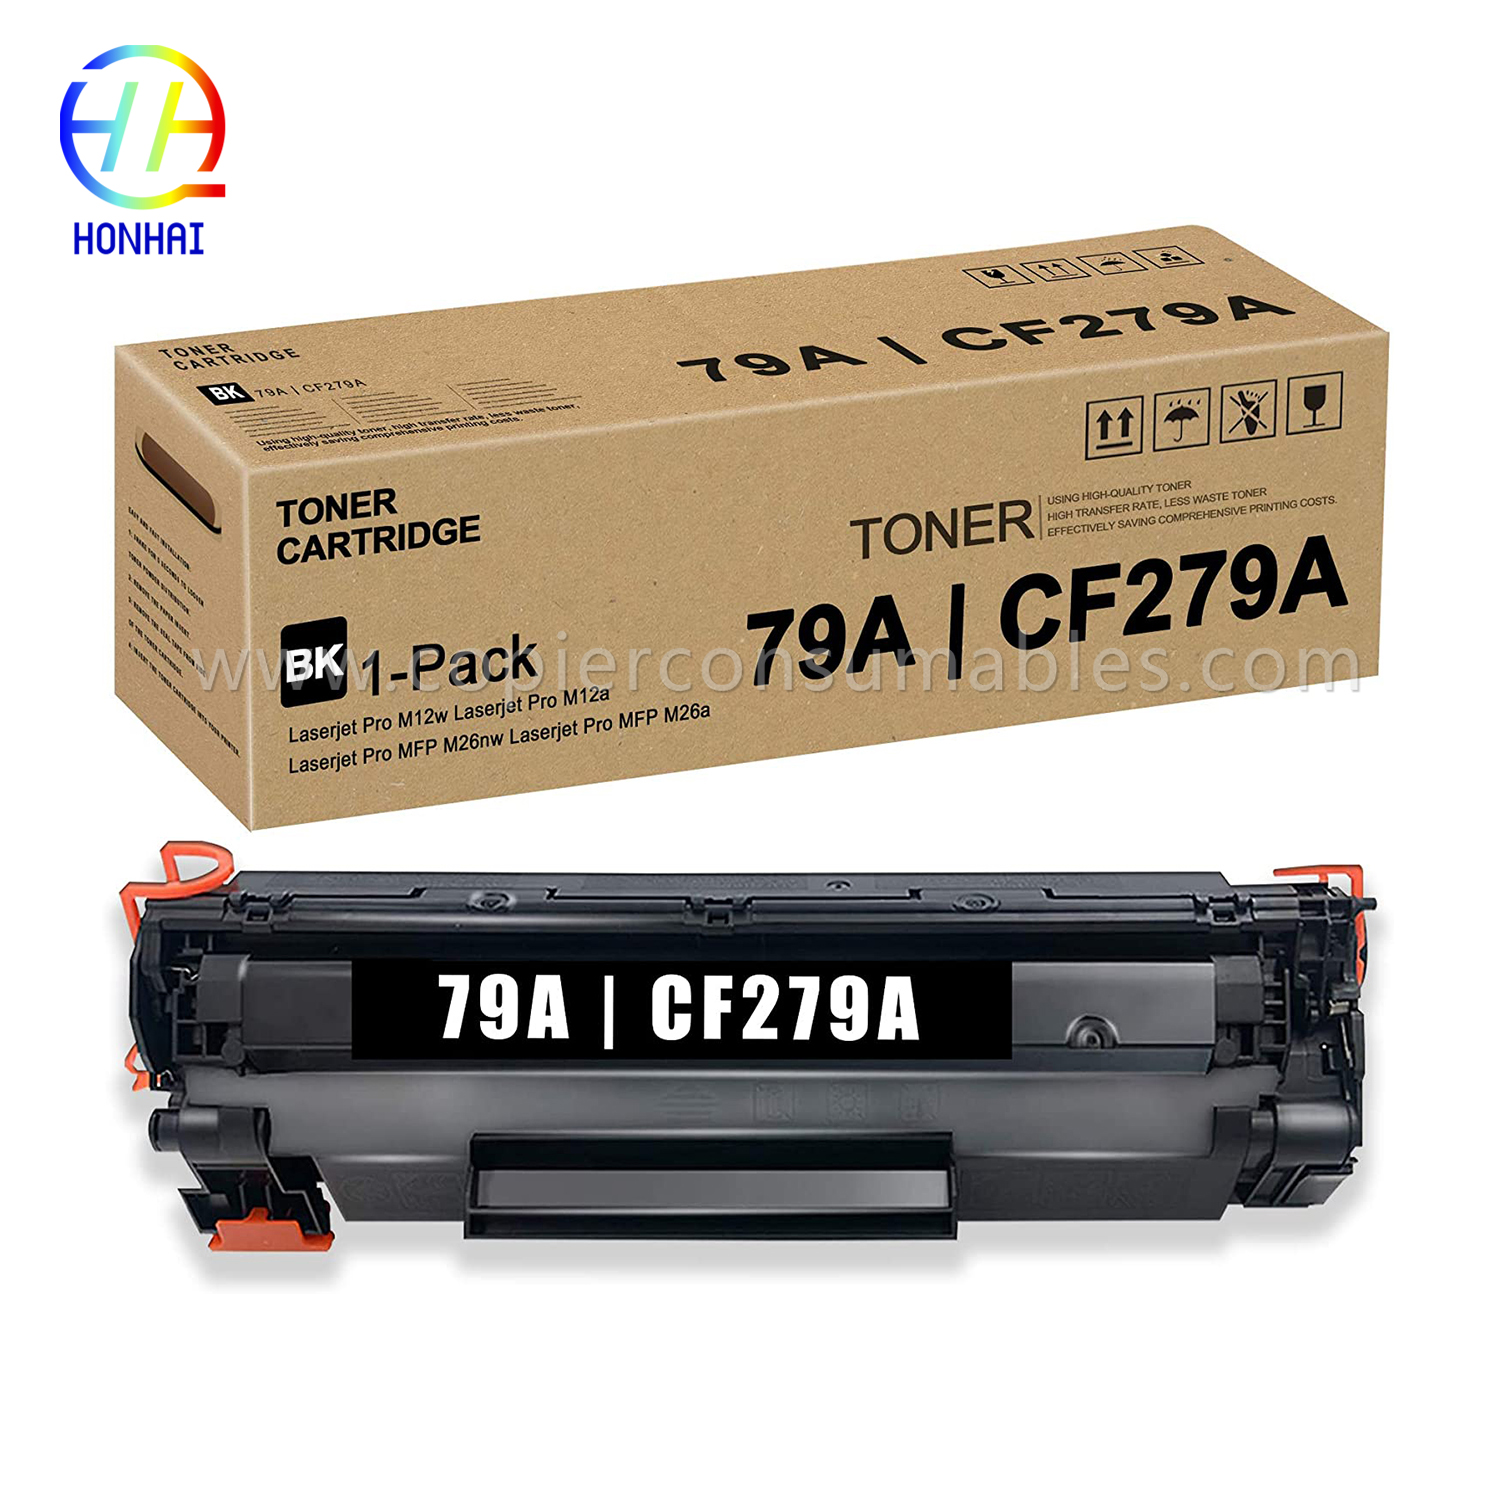 Toner Cartridge na HP Laserjet PRO M12W Mfp M26 M26nw (CF279A)